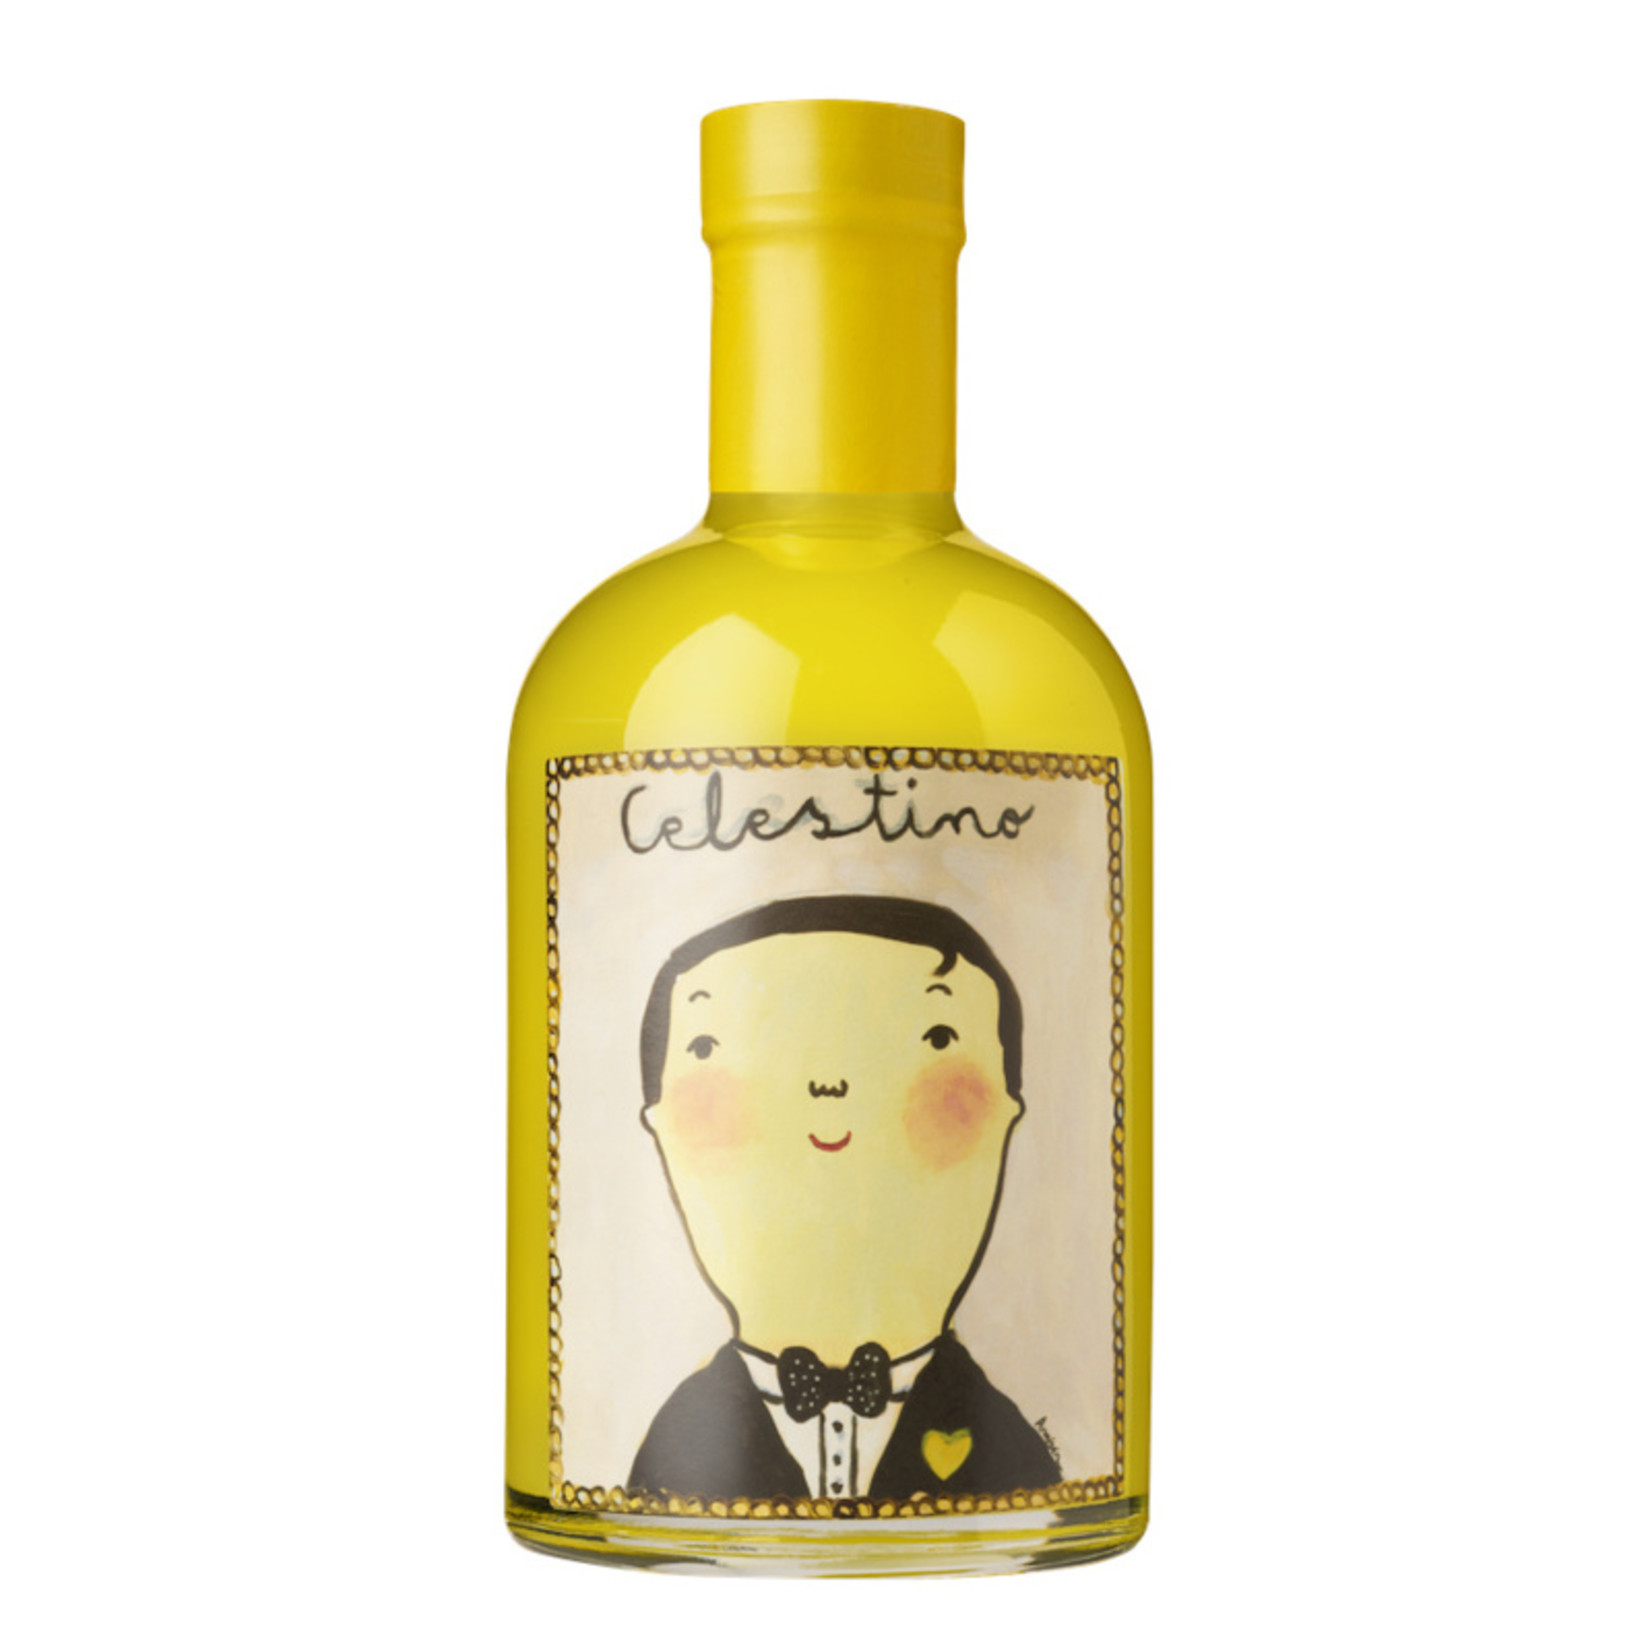 Liqueurful Celestino - liquor of lemons 0.7l 30% vol.